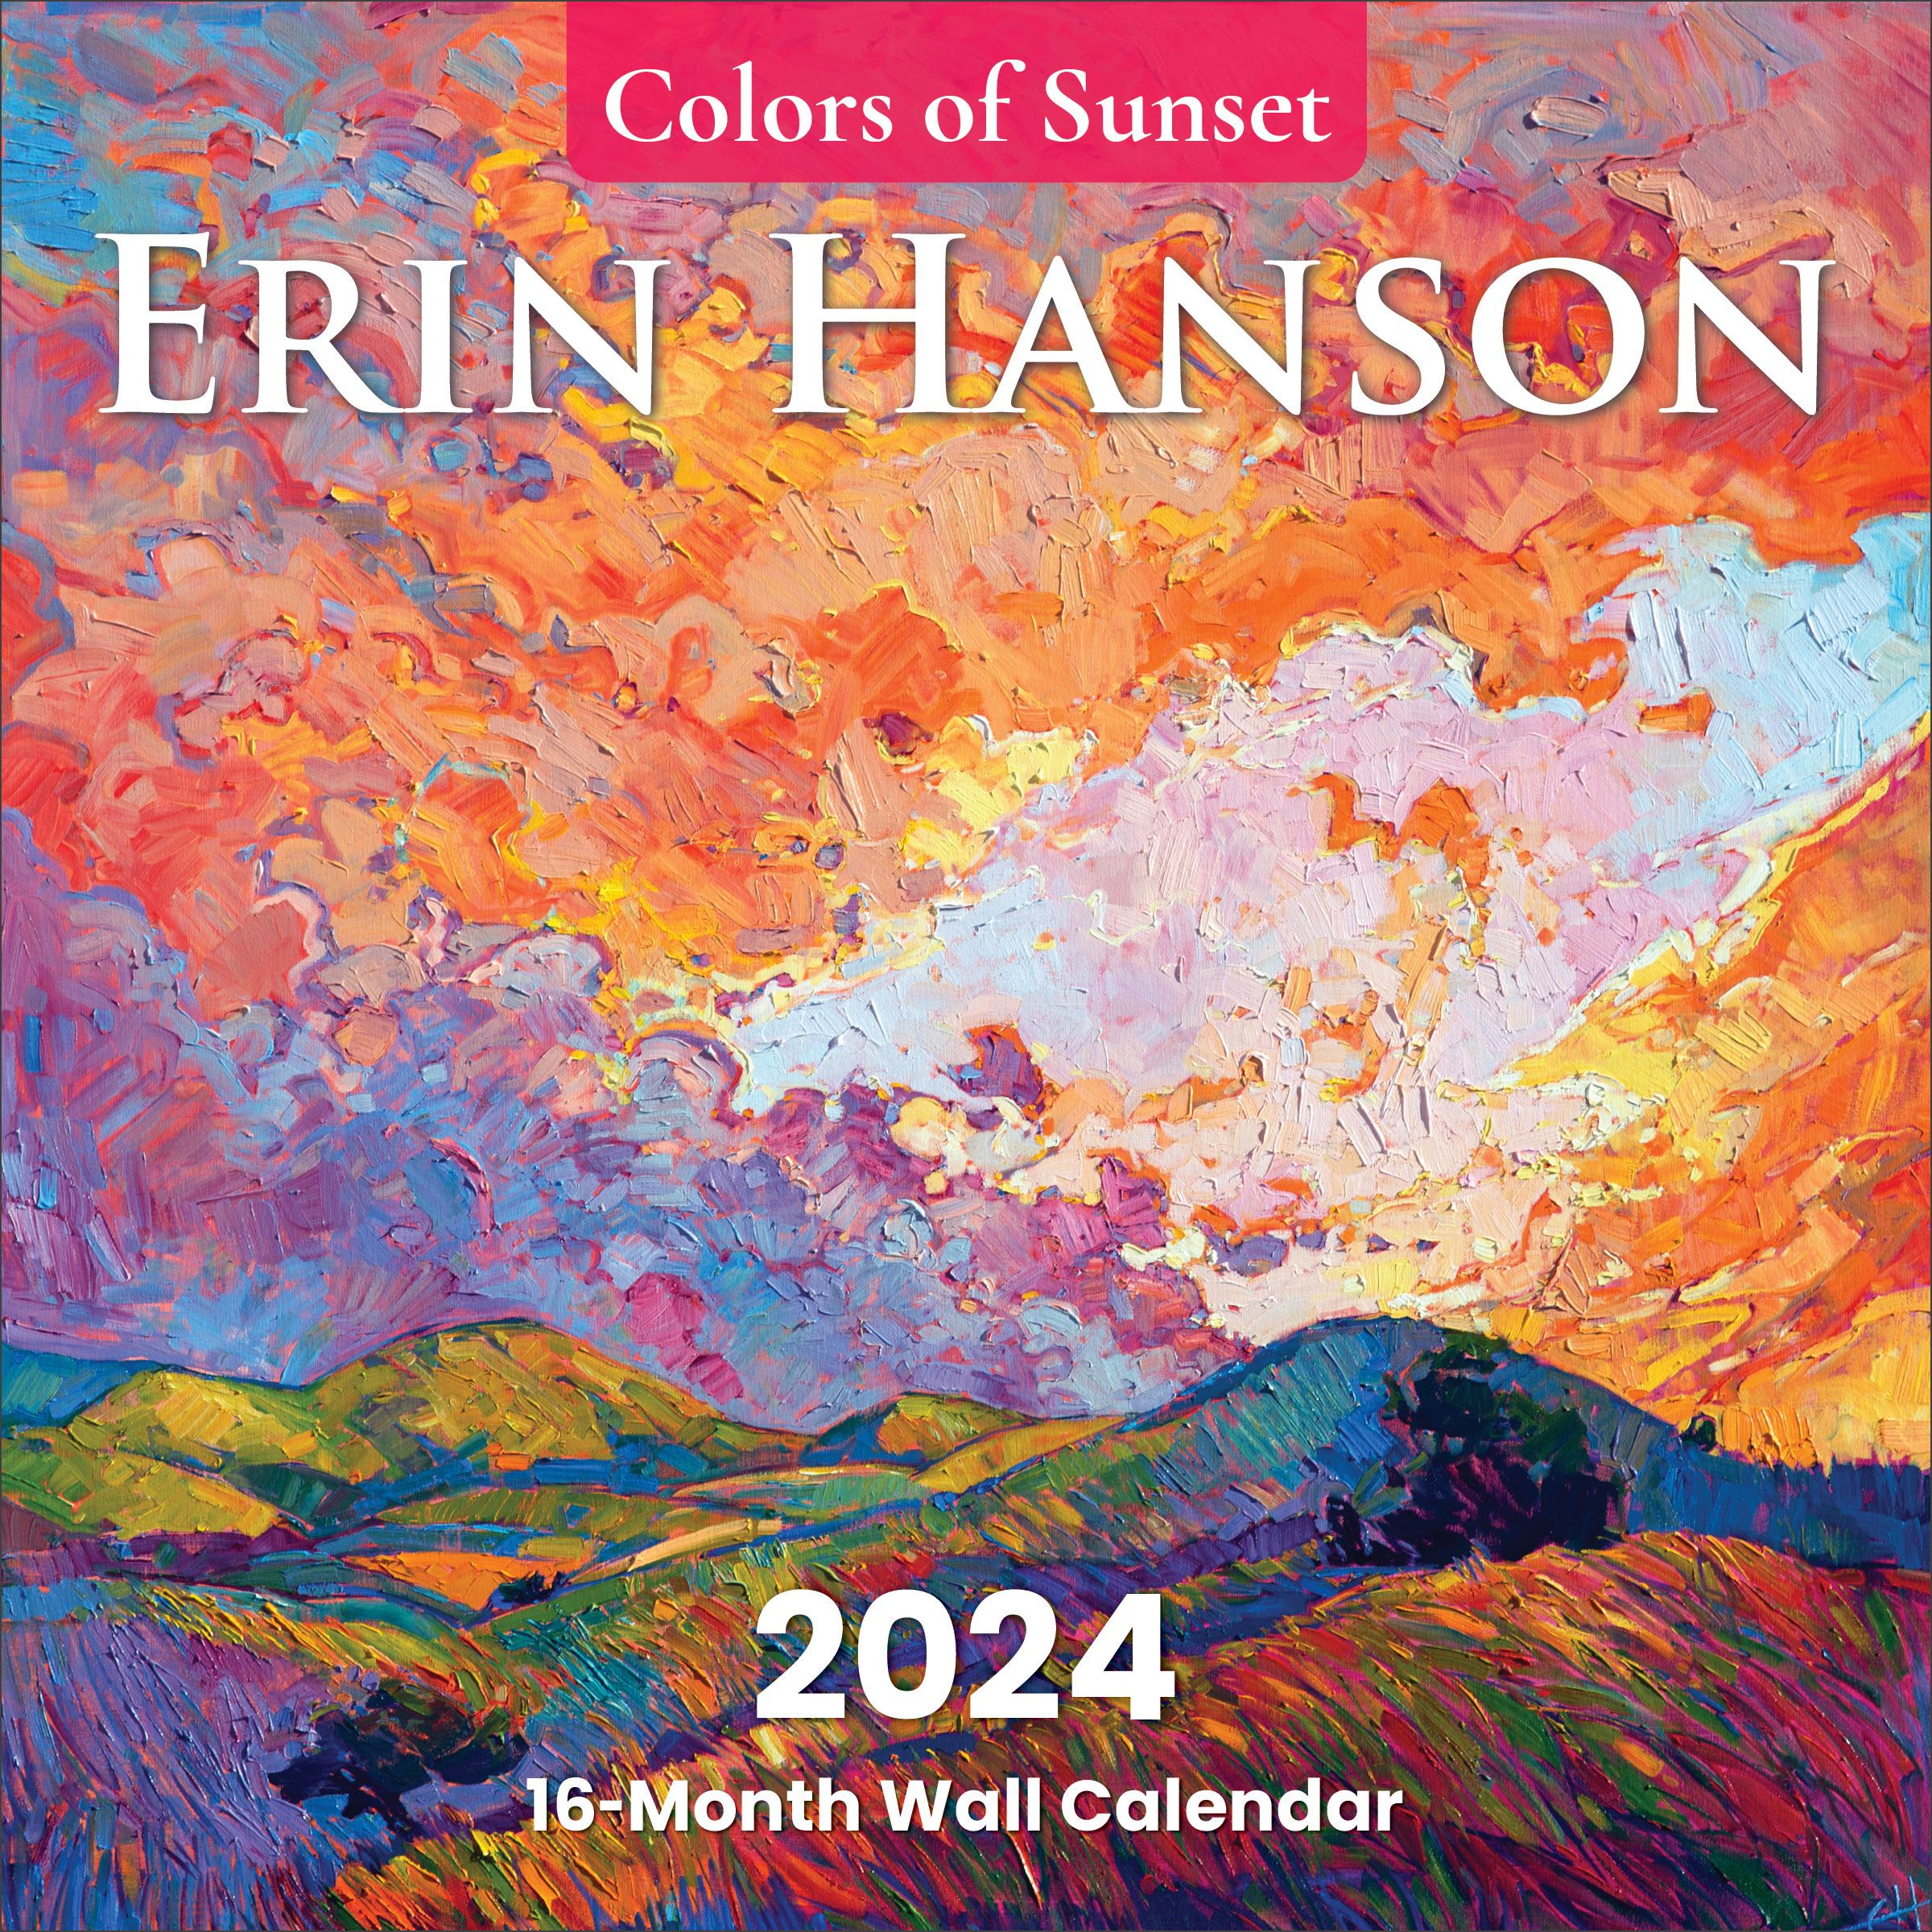 2024 Calendar - Colors of Sunset